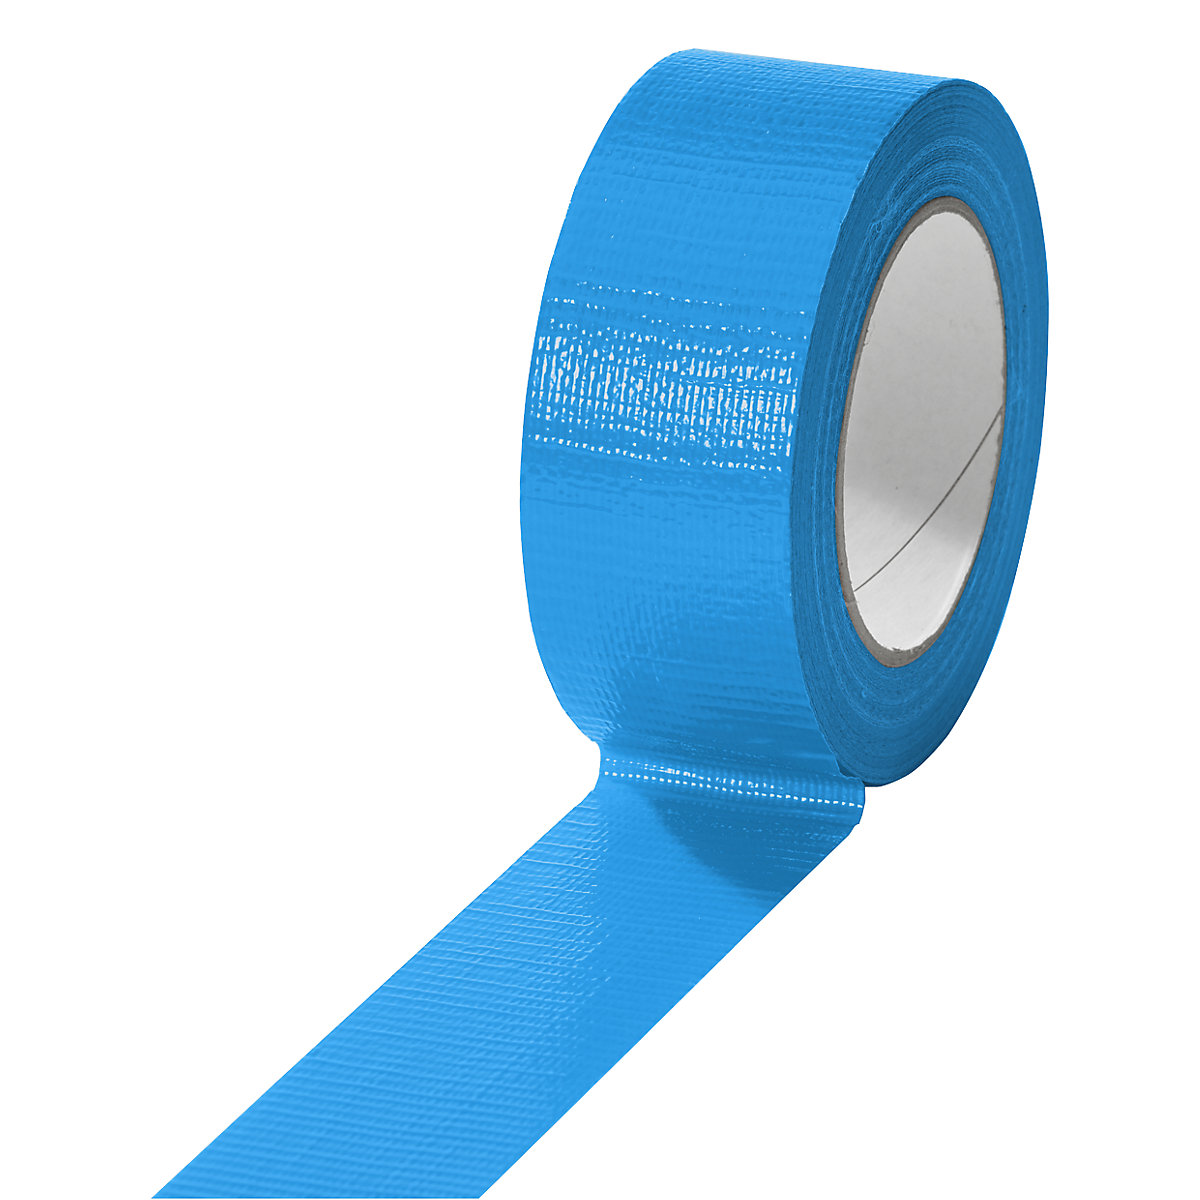 Tkaninová páska, v různých barvách, bal.j. 24 rolí, modrá, šířka pásky 38 mm-15